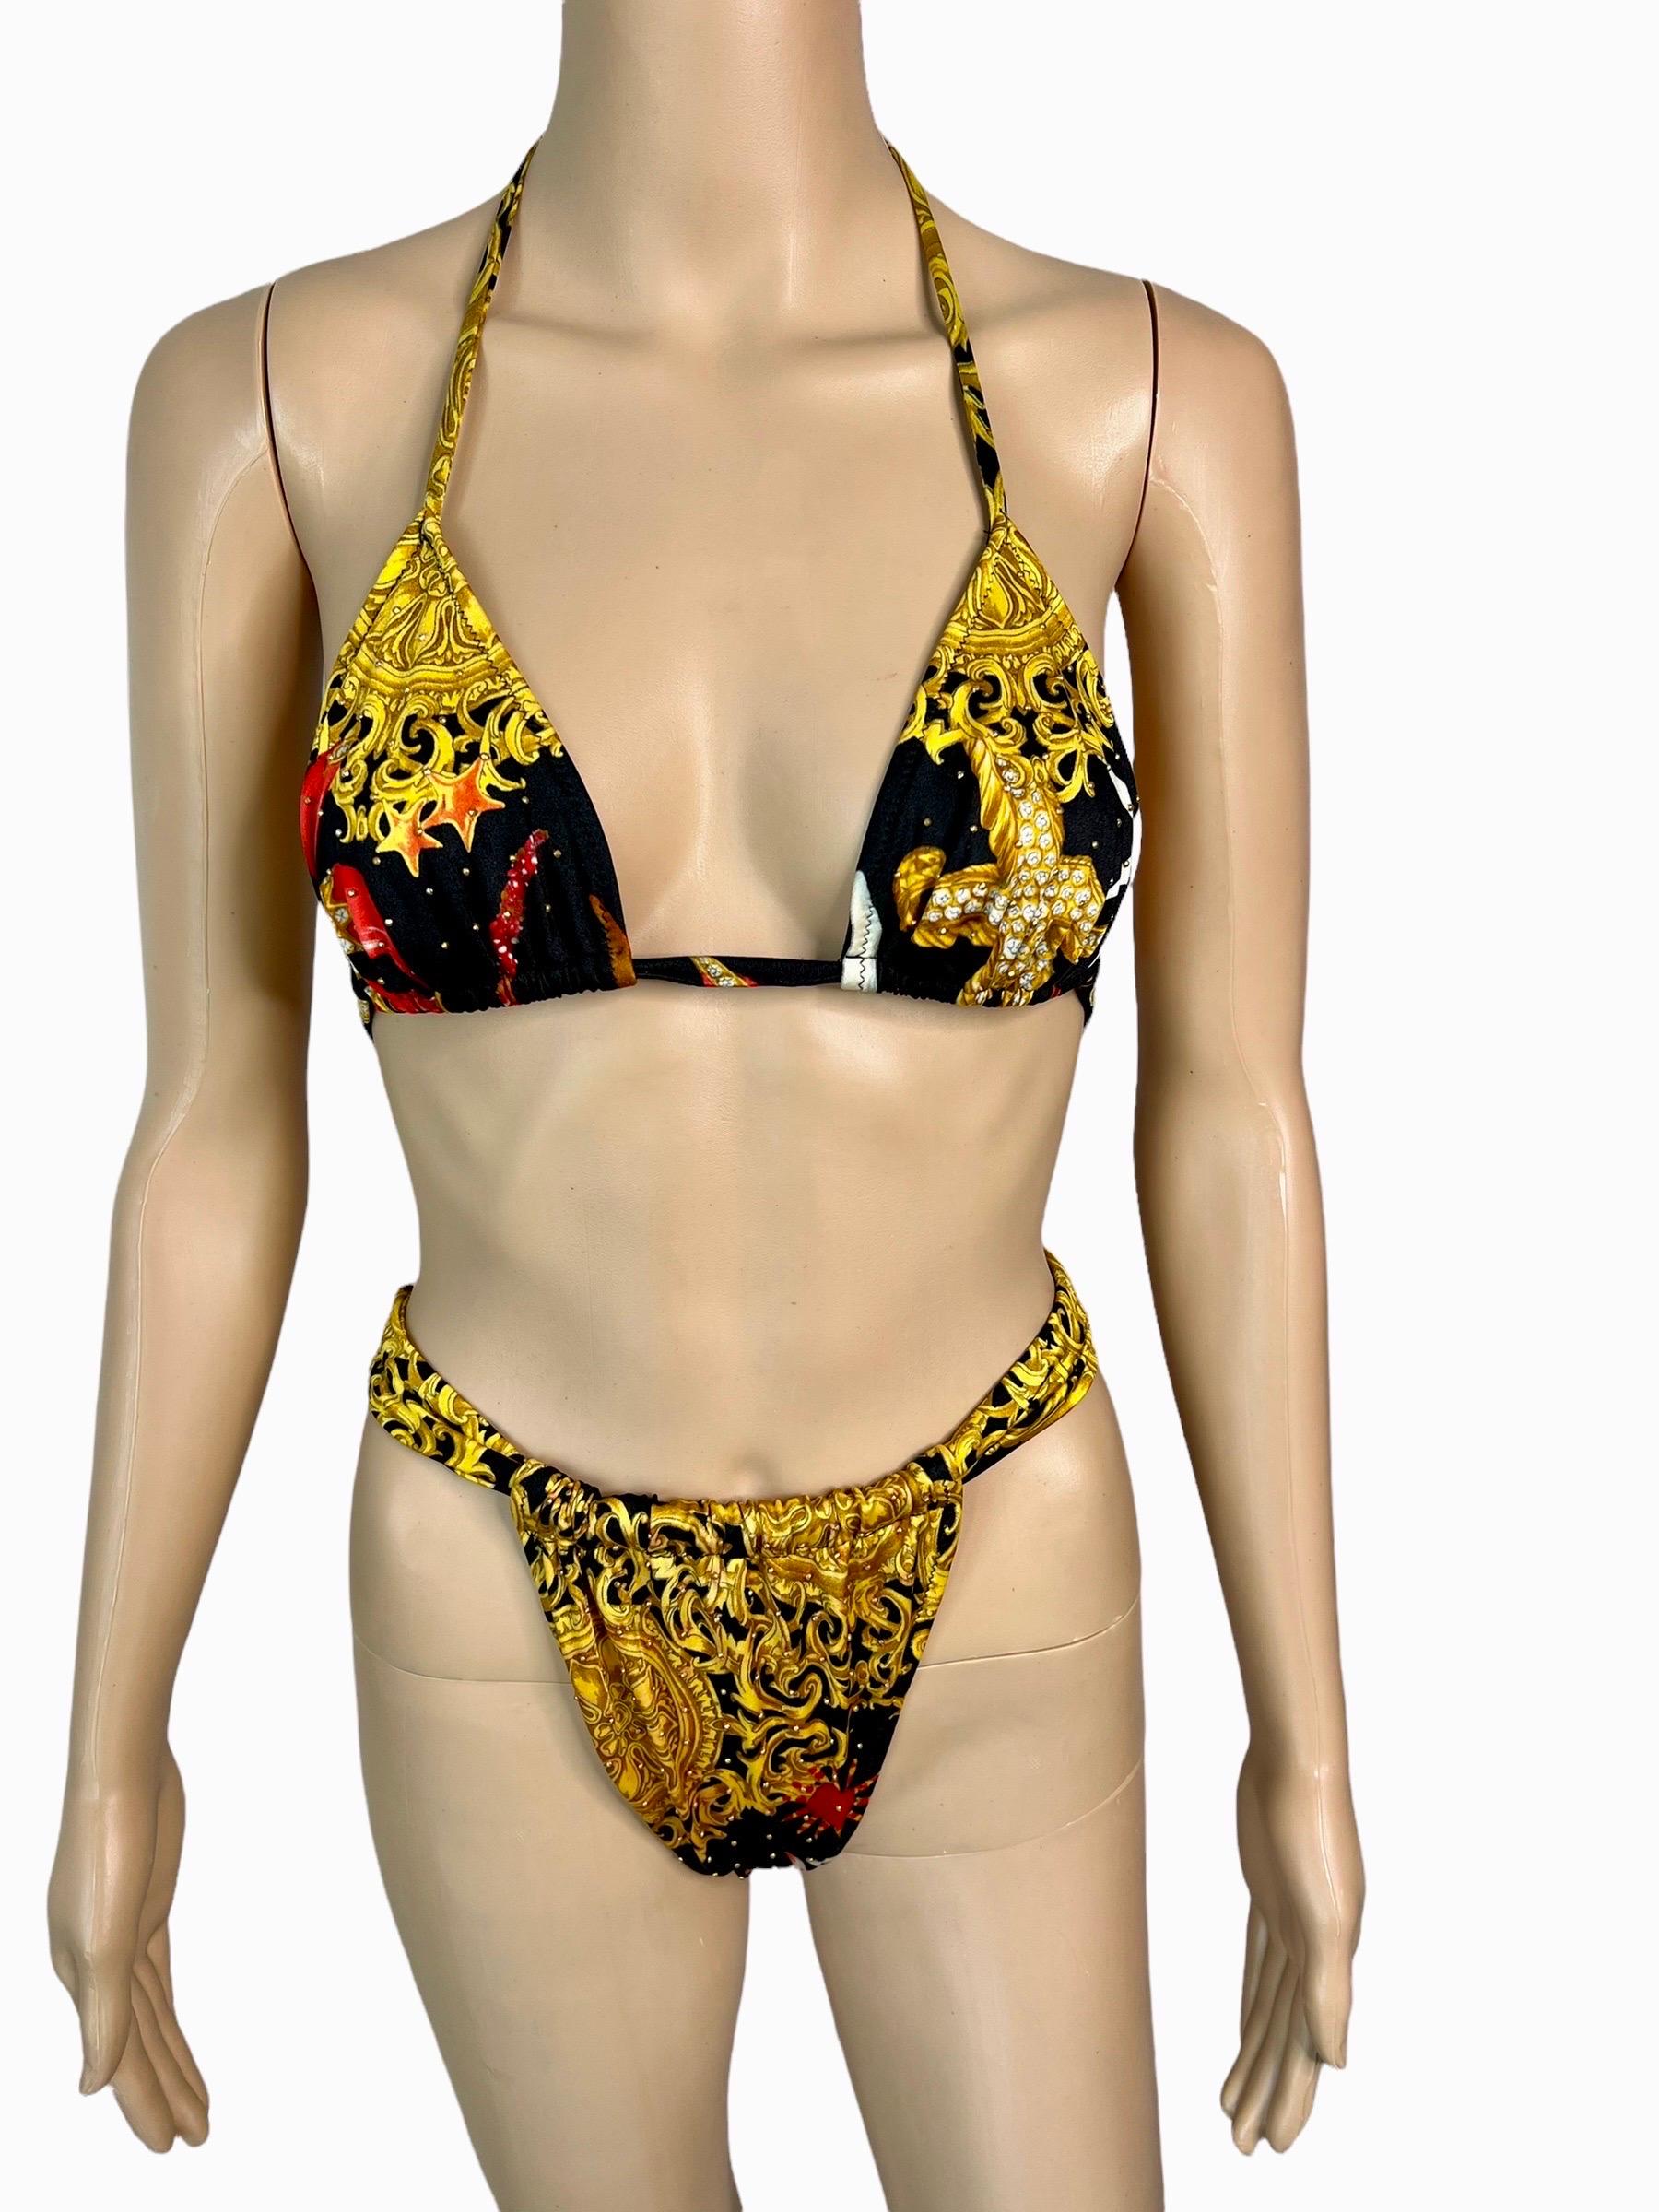 Gianni Versace S/S 1992 Baroque Seashell Print Embellished Studded Two-Piece Set Bikini Swimsuit Swimwear

Size IT 42 
